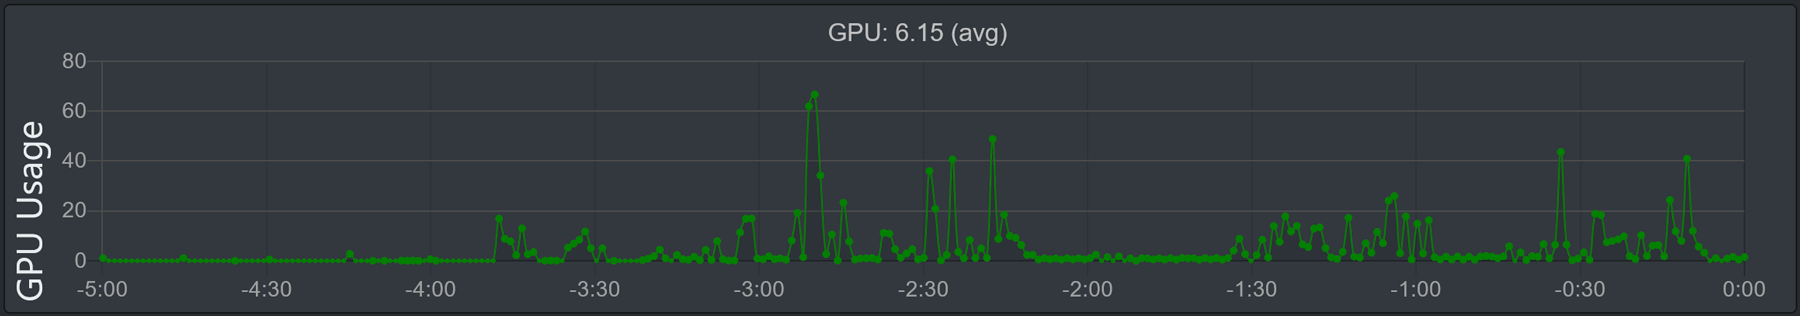 「GPU使用状況」グラフの画像